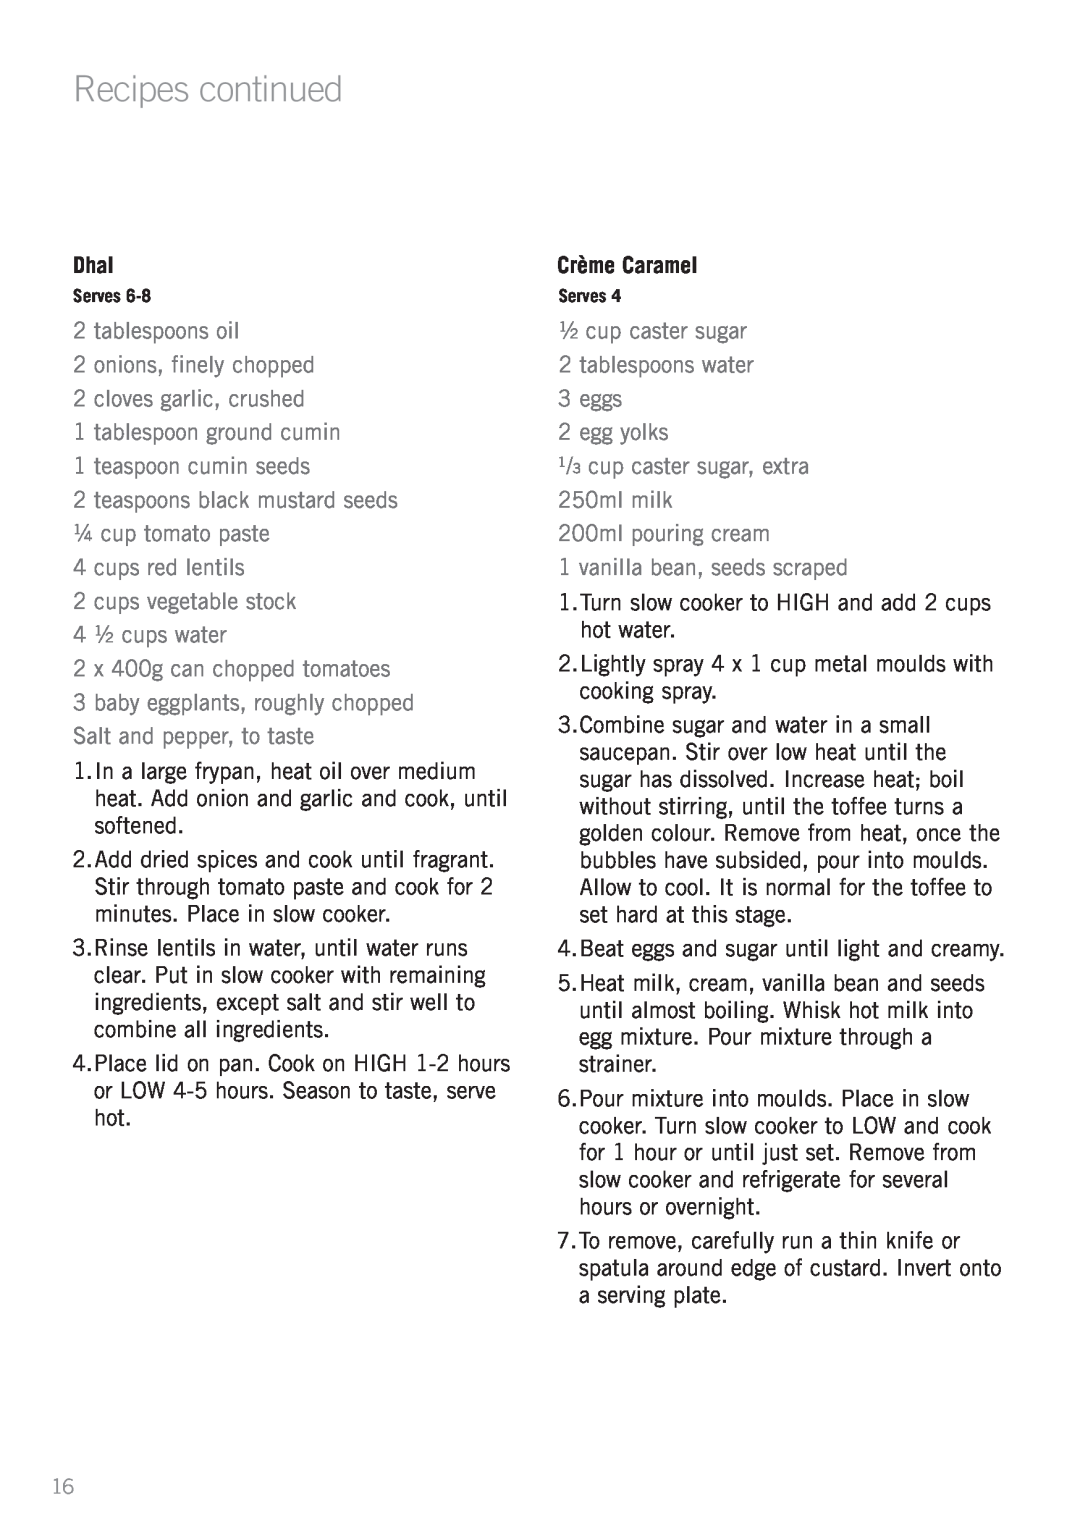 Sunbeam HP6000 manual Dhal, Crème Caramel, Recipes continued 